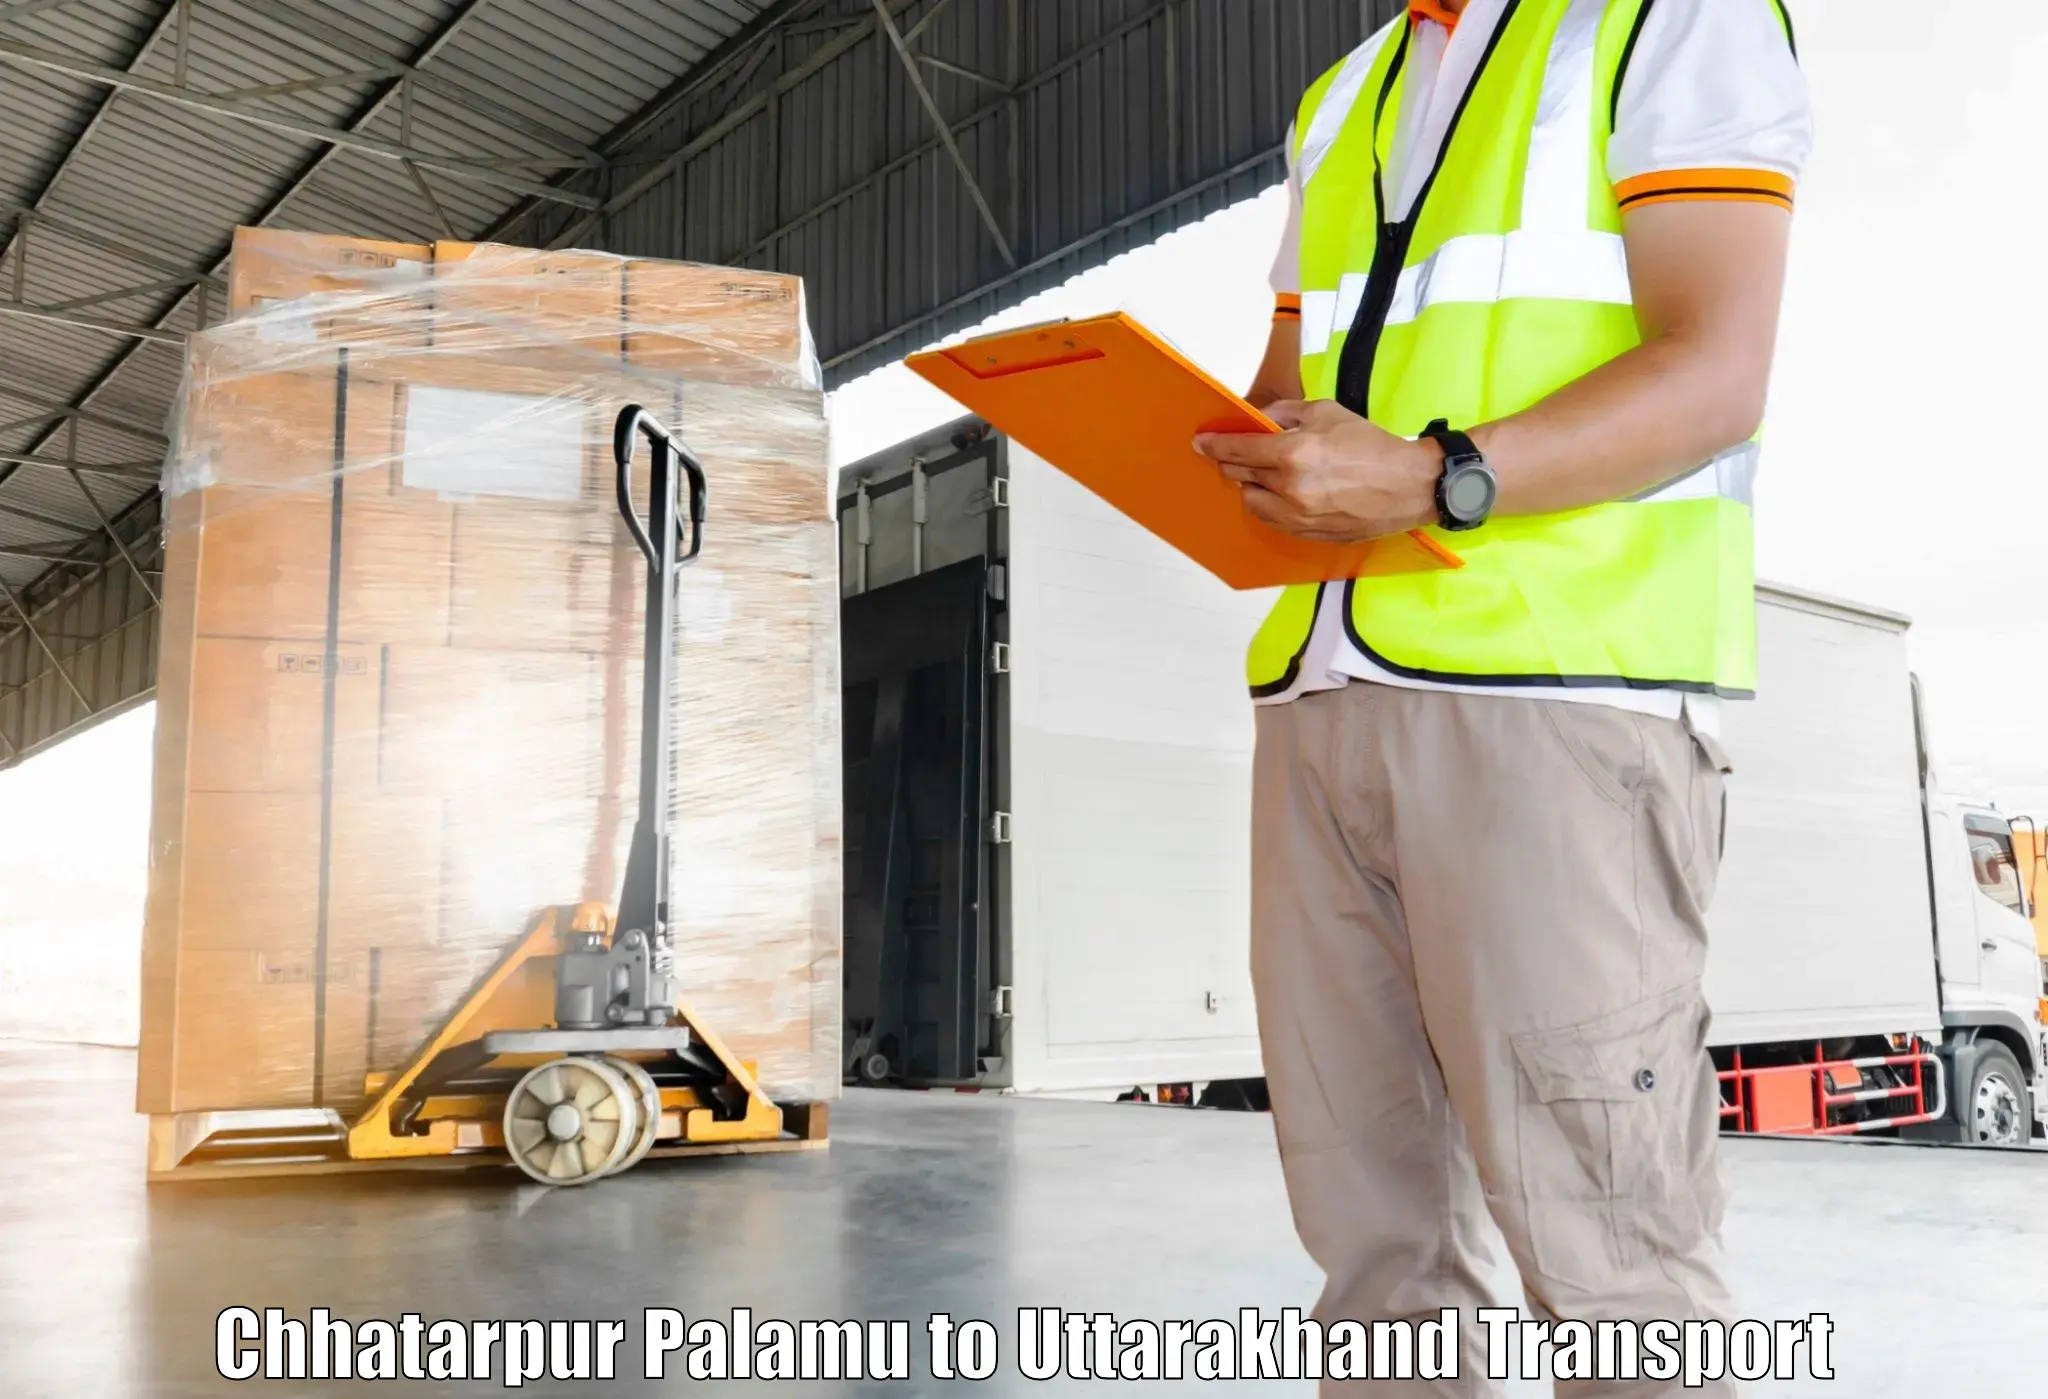 Shipping partner Chhatarpur Palamu to IIT Roorkee